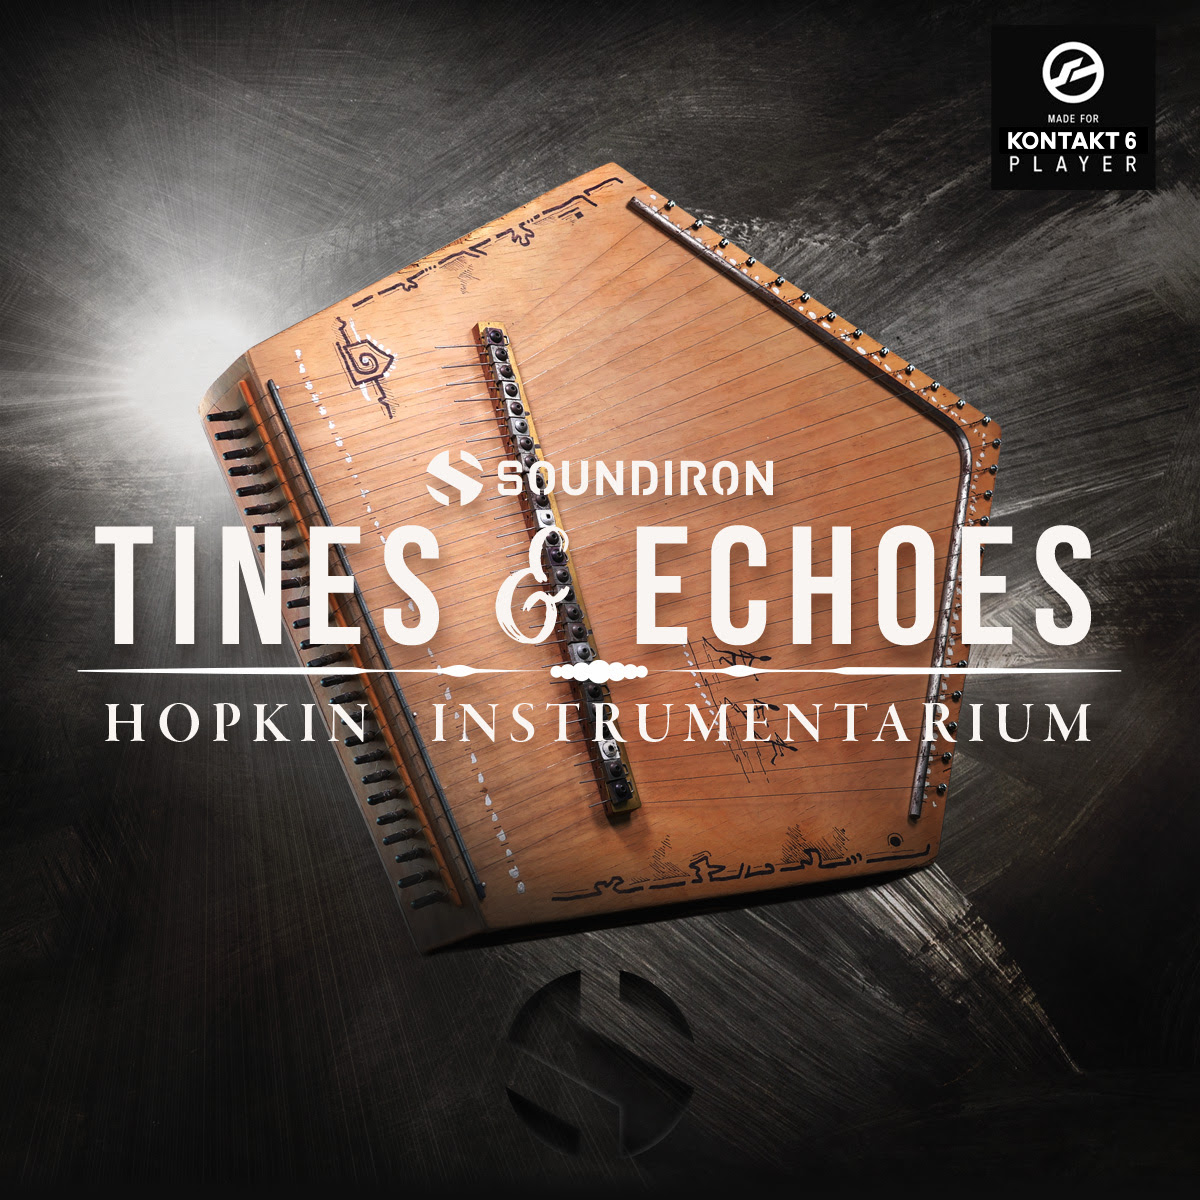 Soundiron Releases Hopkin Instrumentarium Tines Echoes